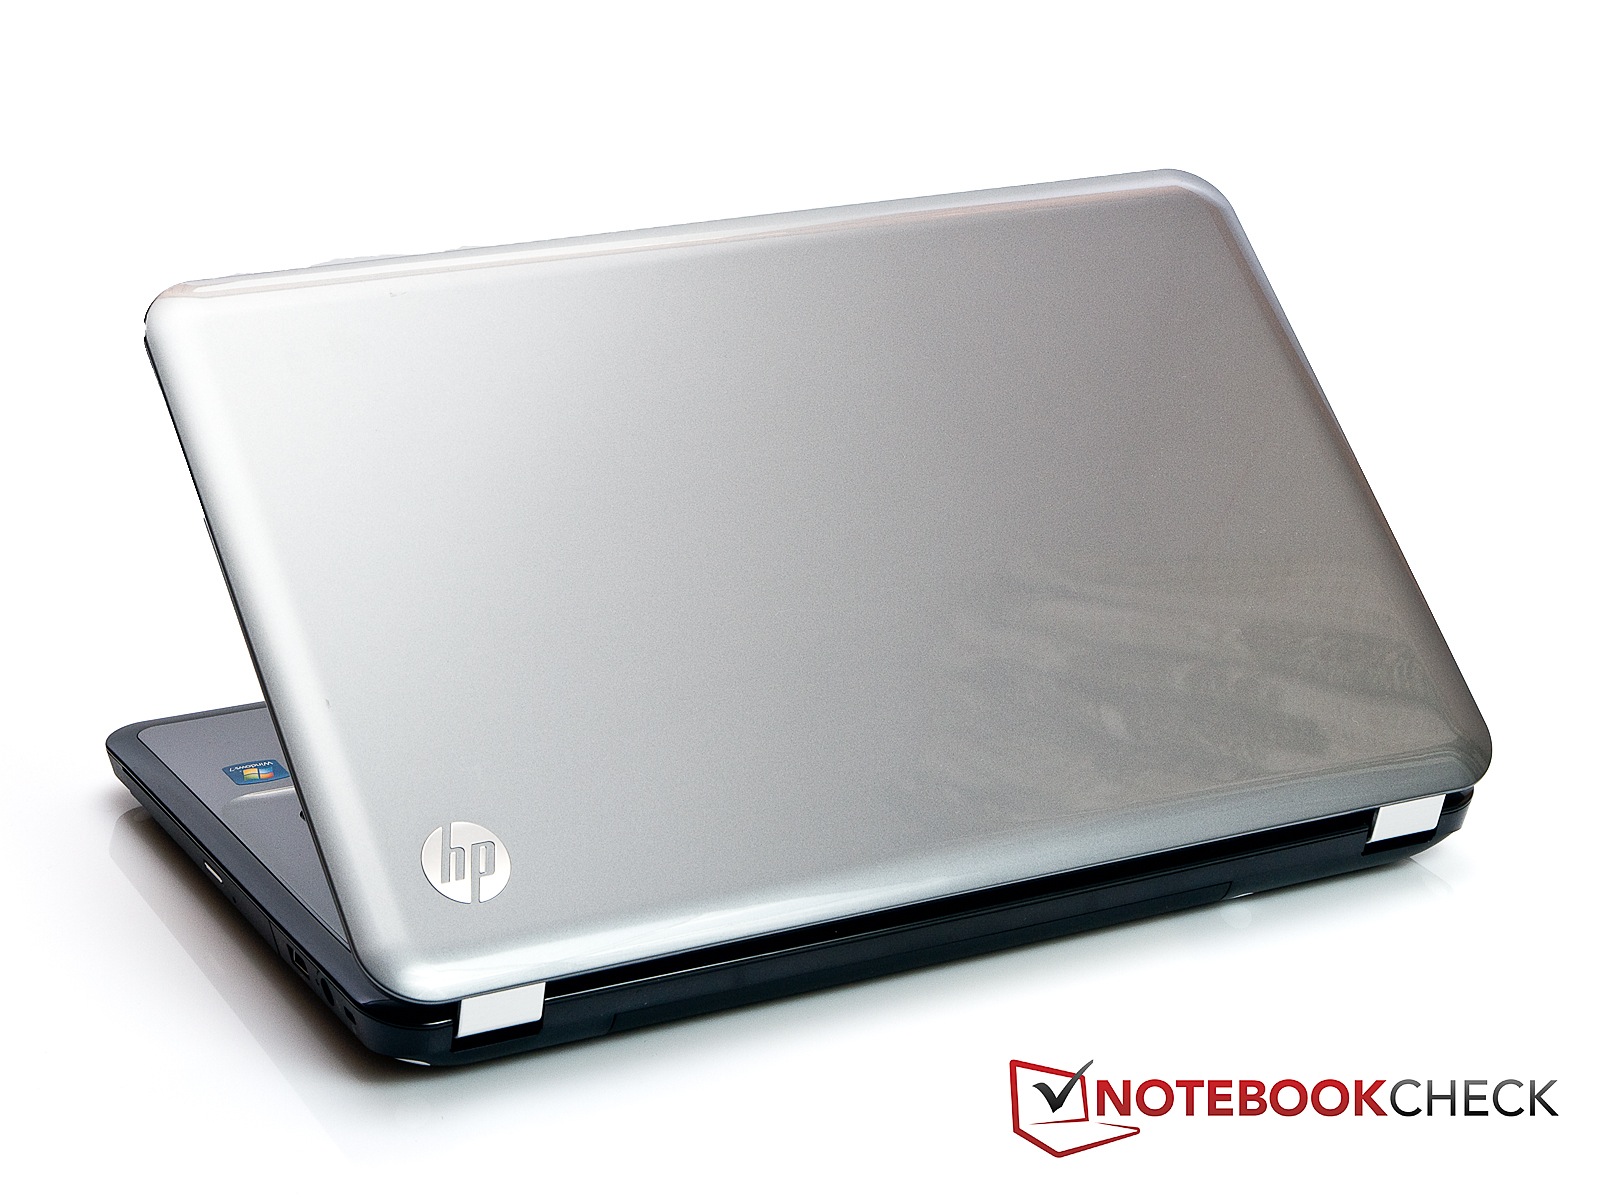 Ноутбук Hp Pavilion G6 Notebook Pc Обзор